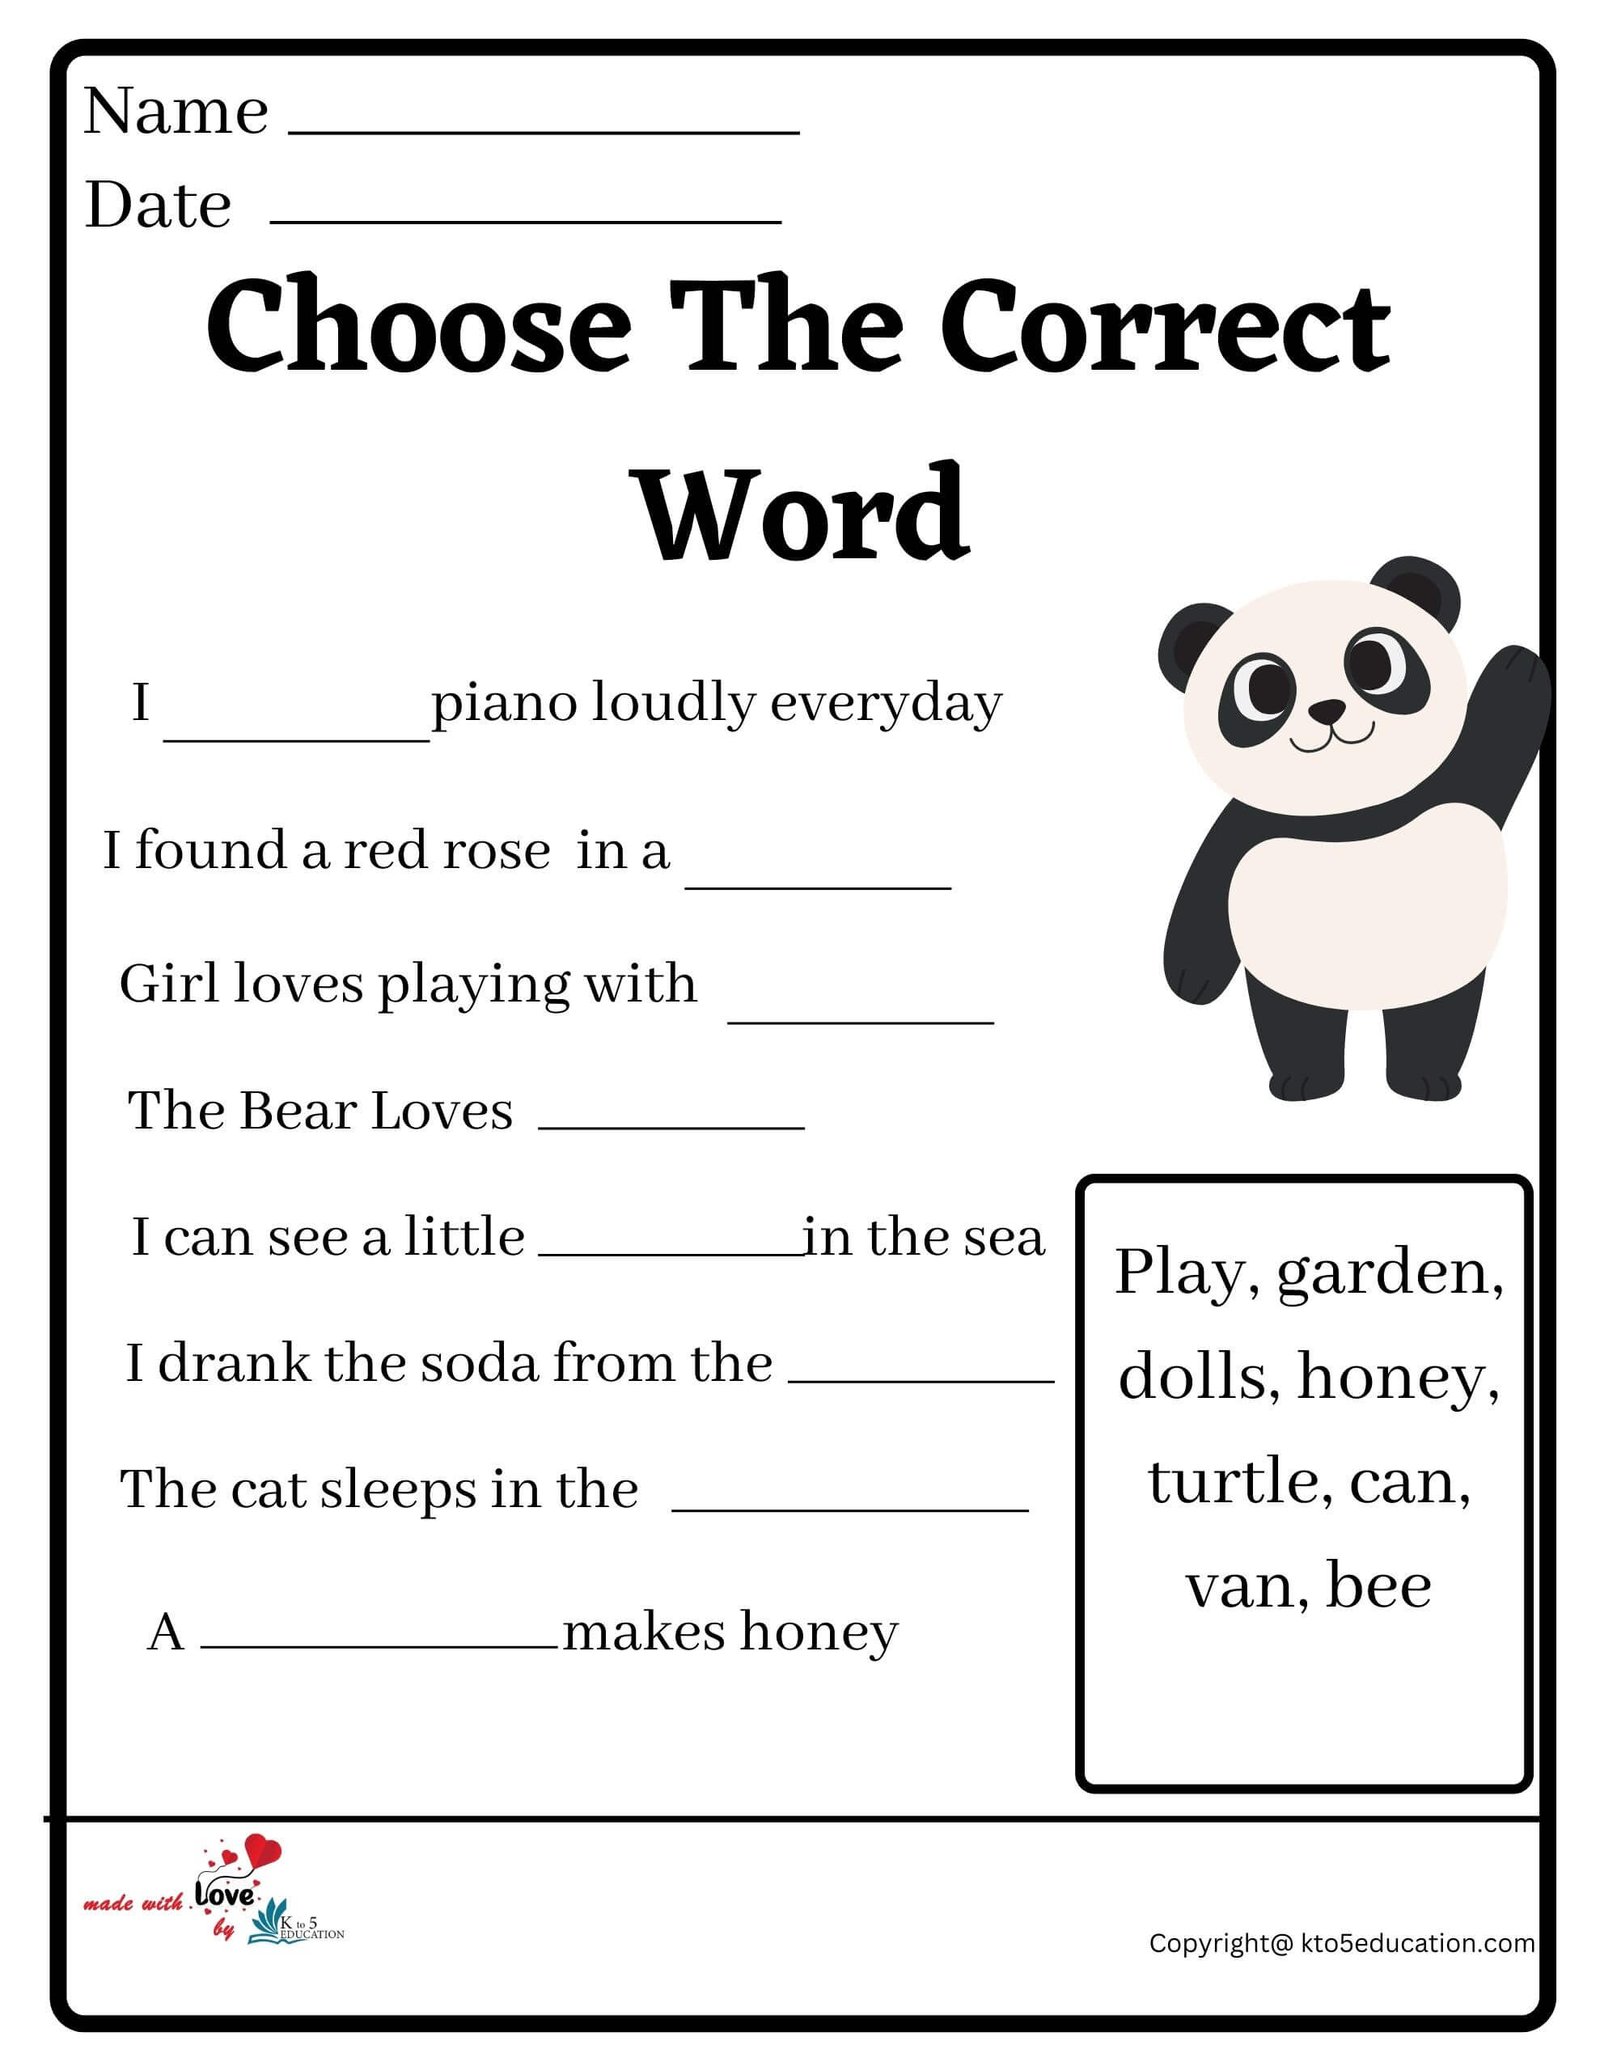 Choose The Correct Word Worksheet 2